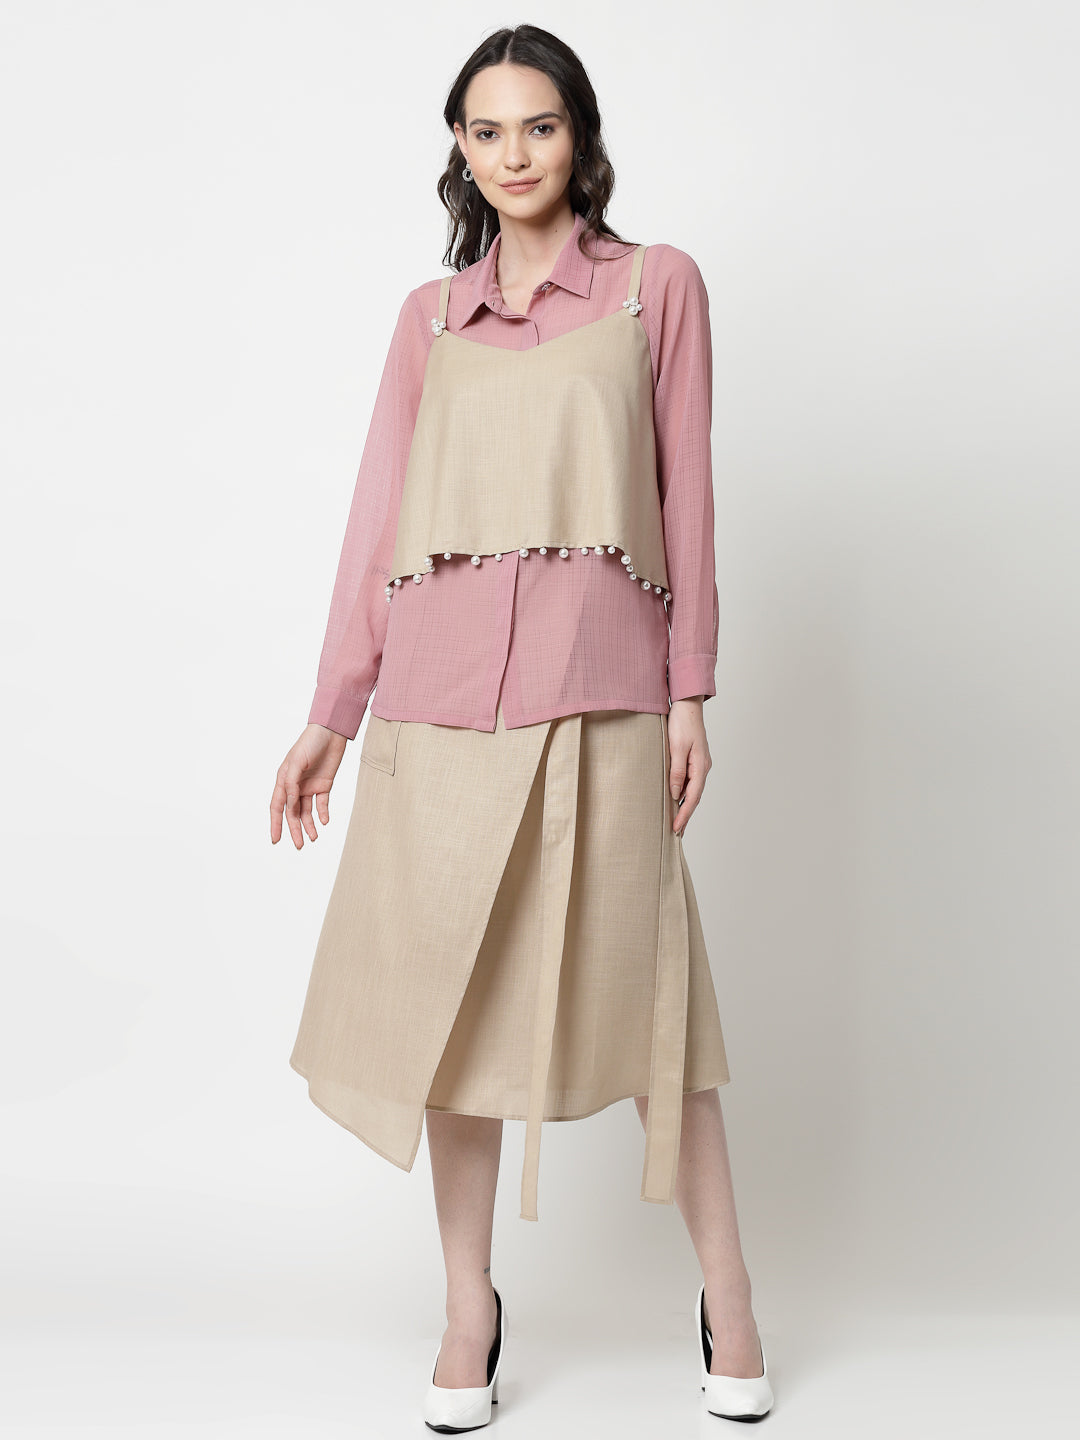 Light Beige Linen Skirt With Pocket